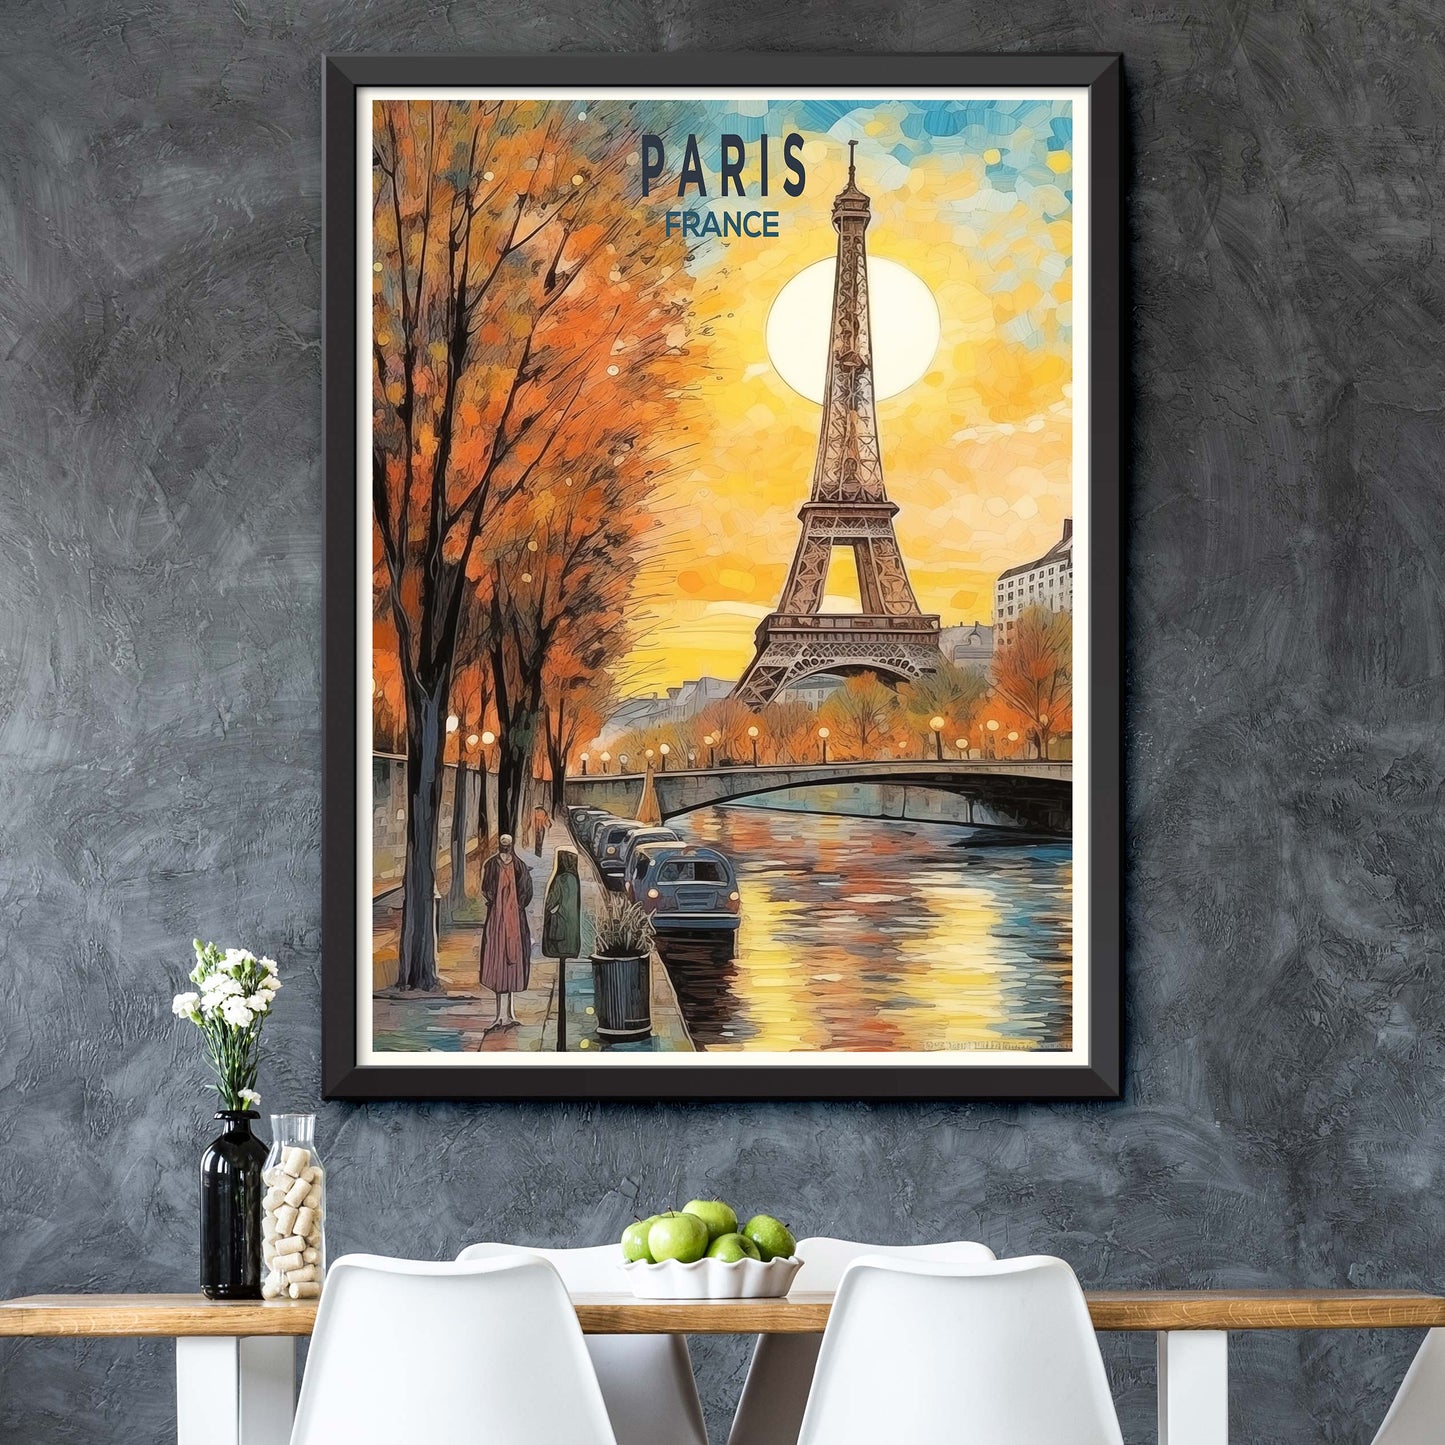 Paris, France: City of Lights